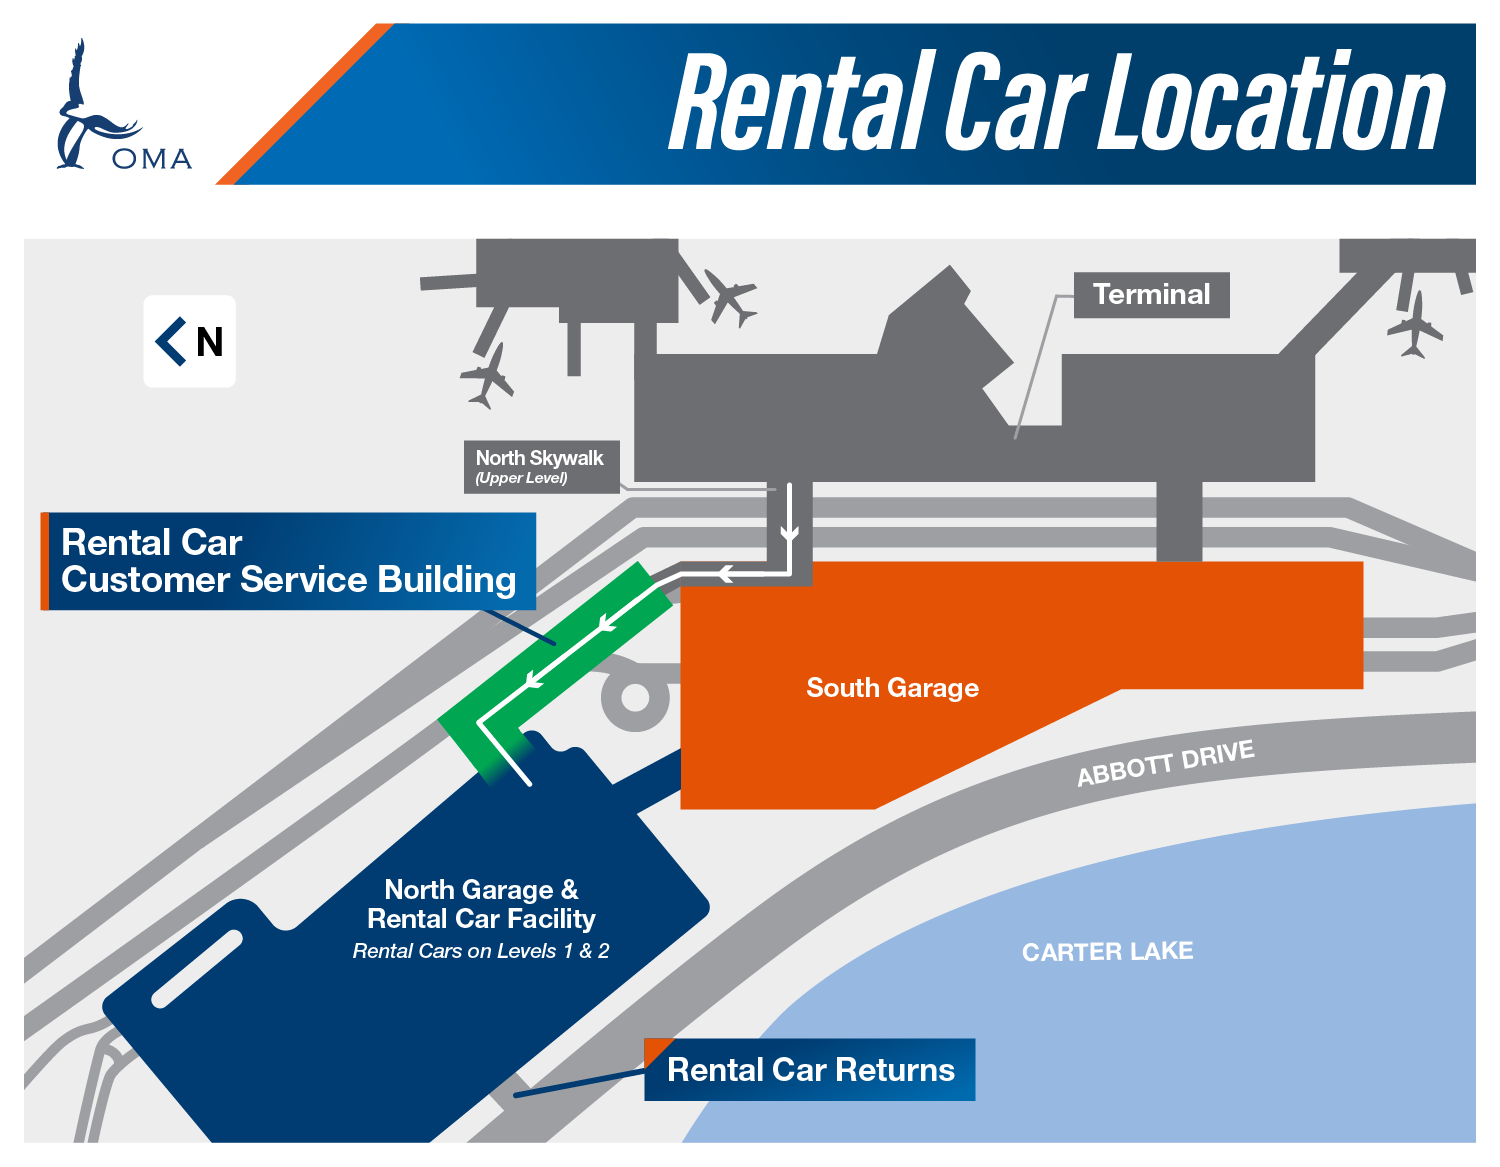 OMA Rental Car Location Map